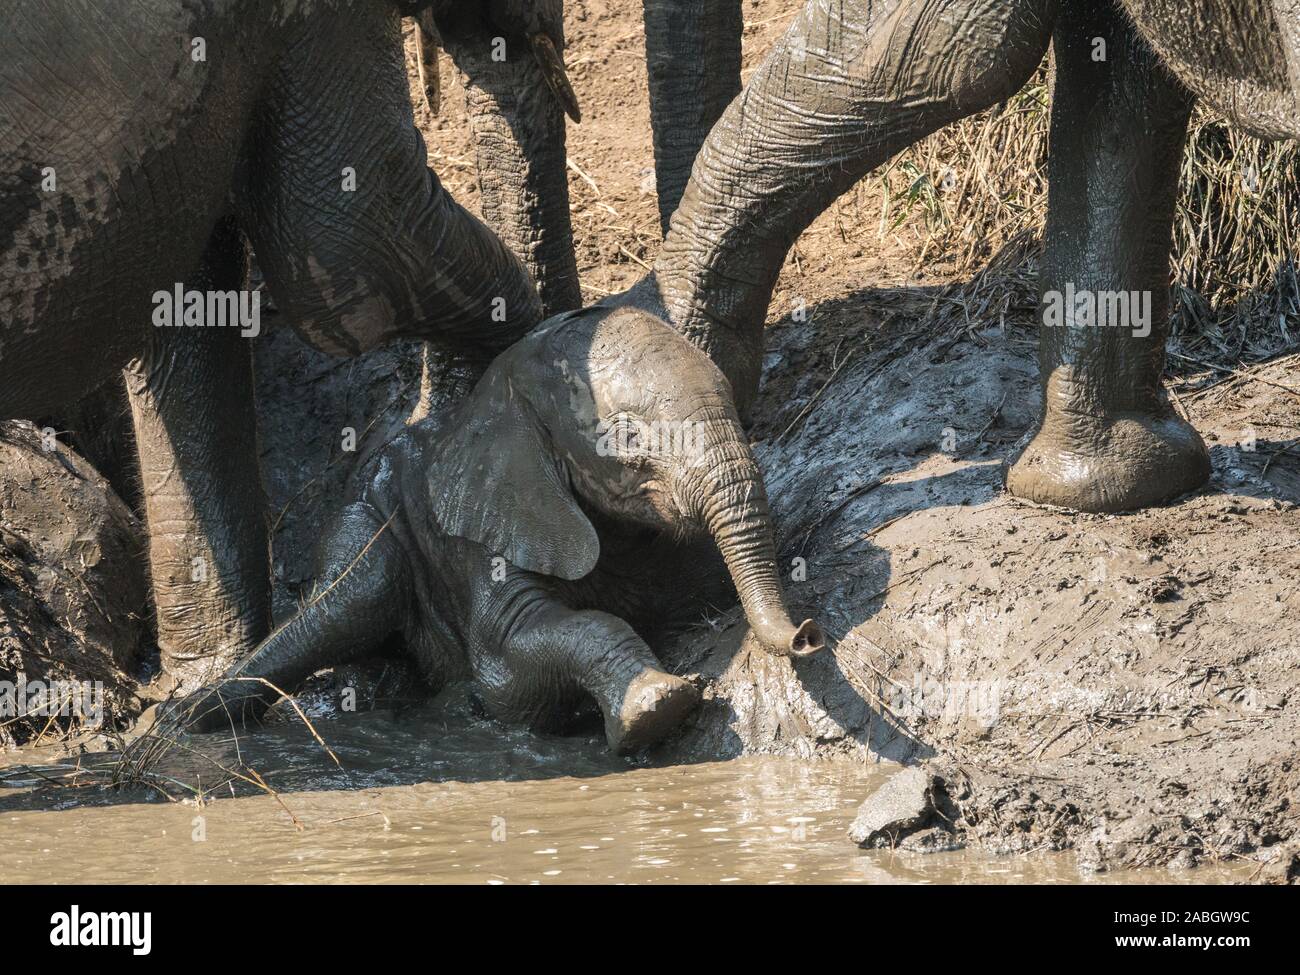 Baby elefante africano distesi o seduti in acqua fangosa, coperto di fango ed essendo spinto da due elefanti per adulti a waterhole in Kruger, Sud Africa Foto Stock